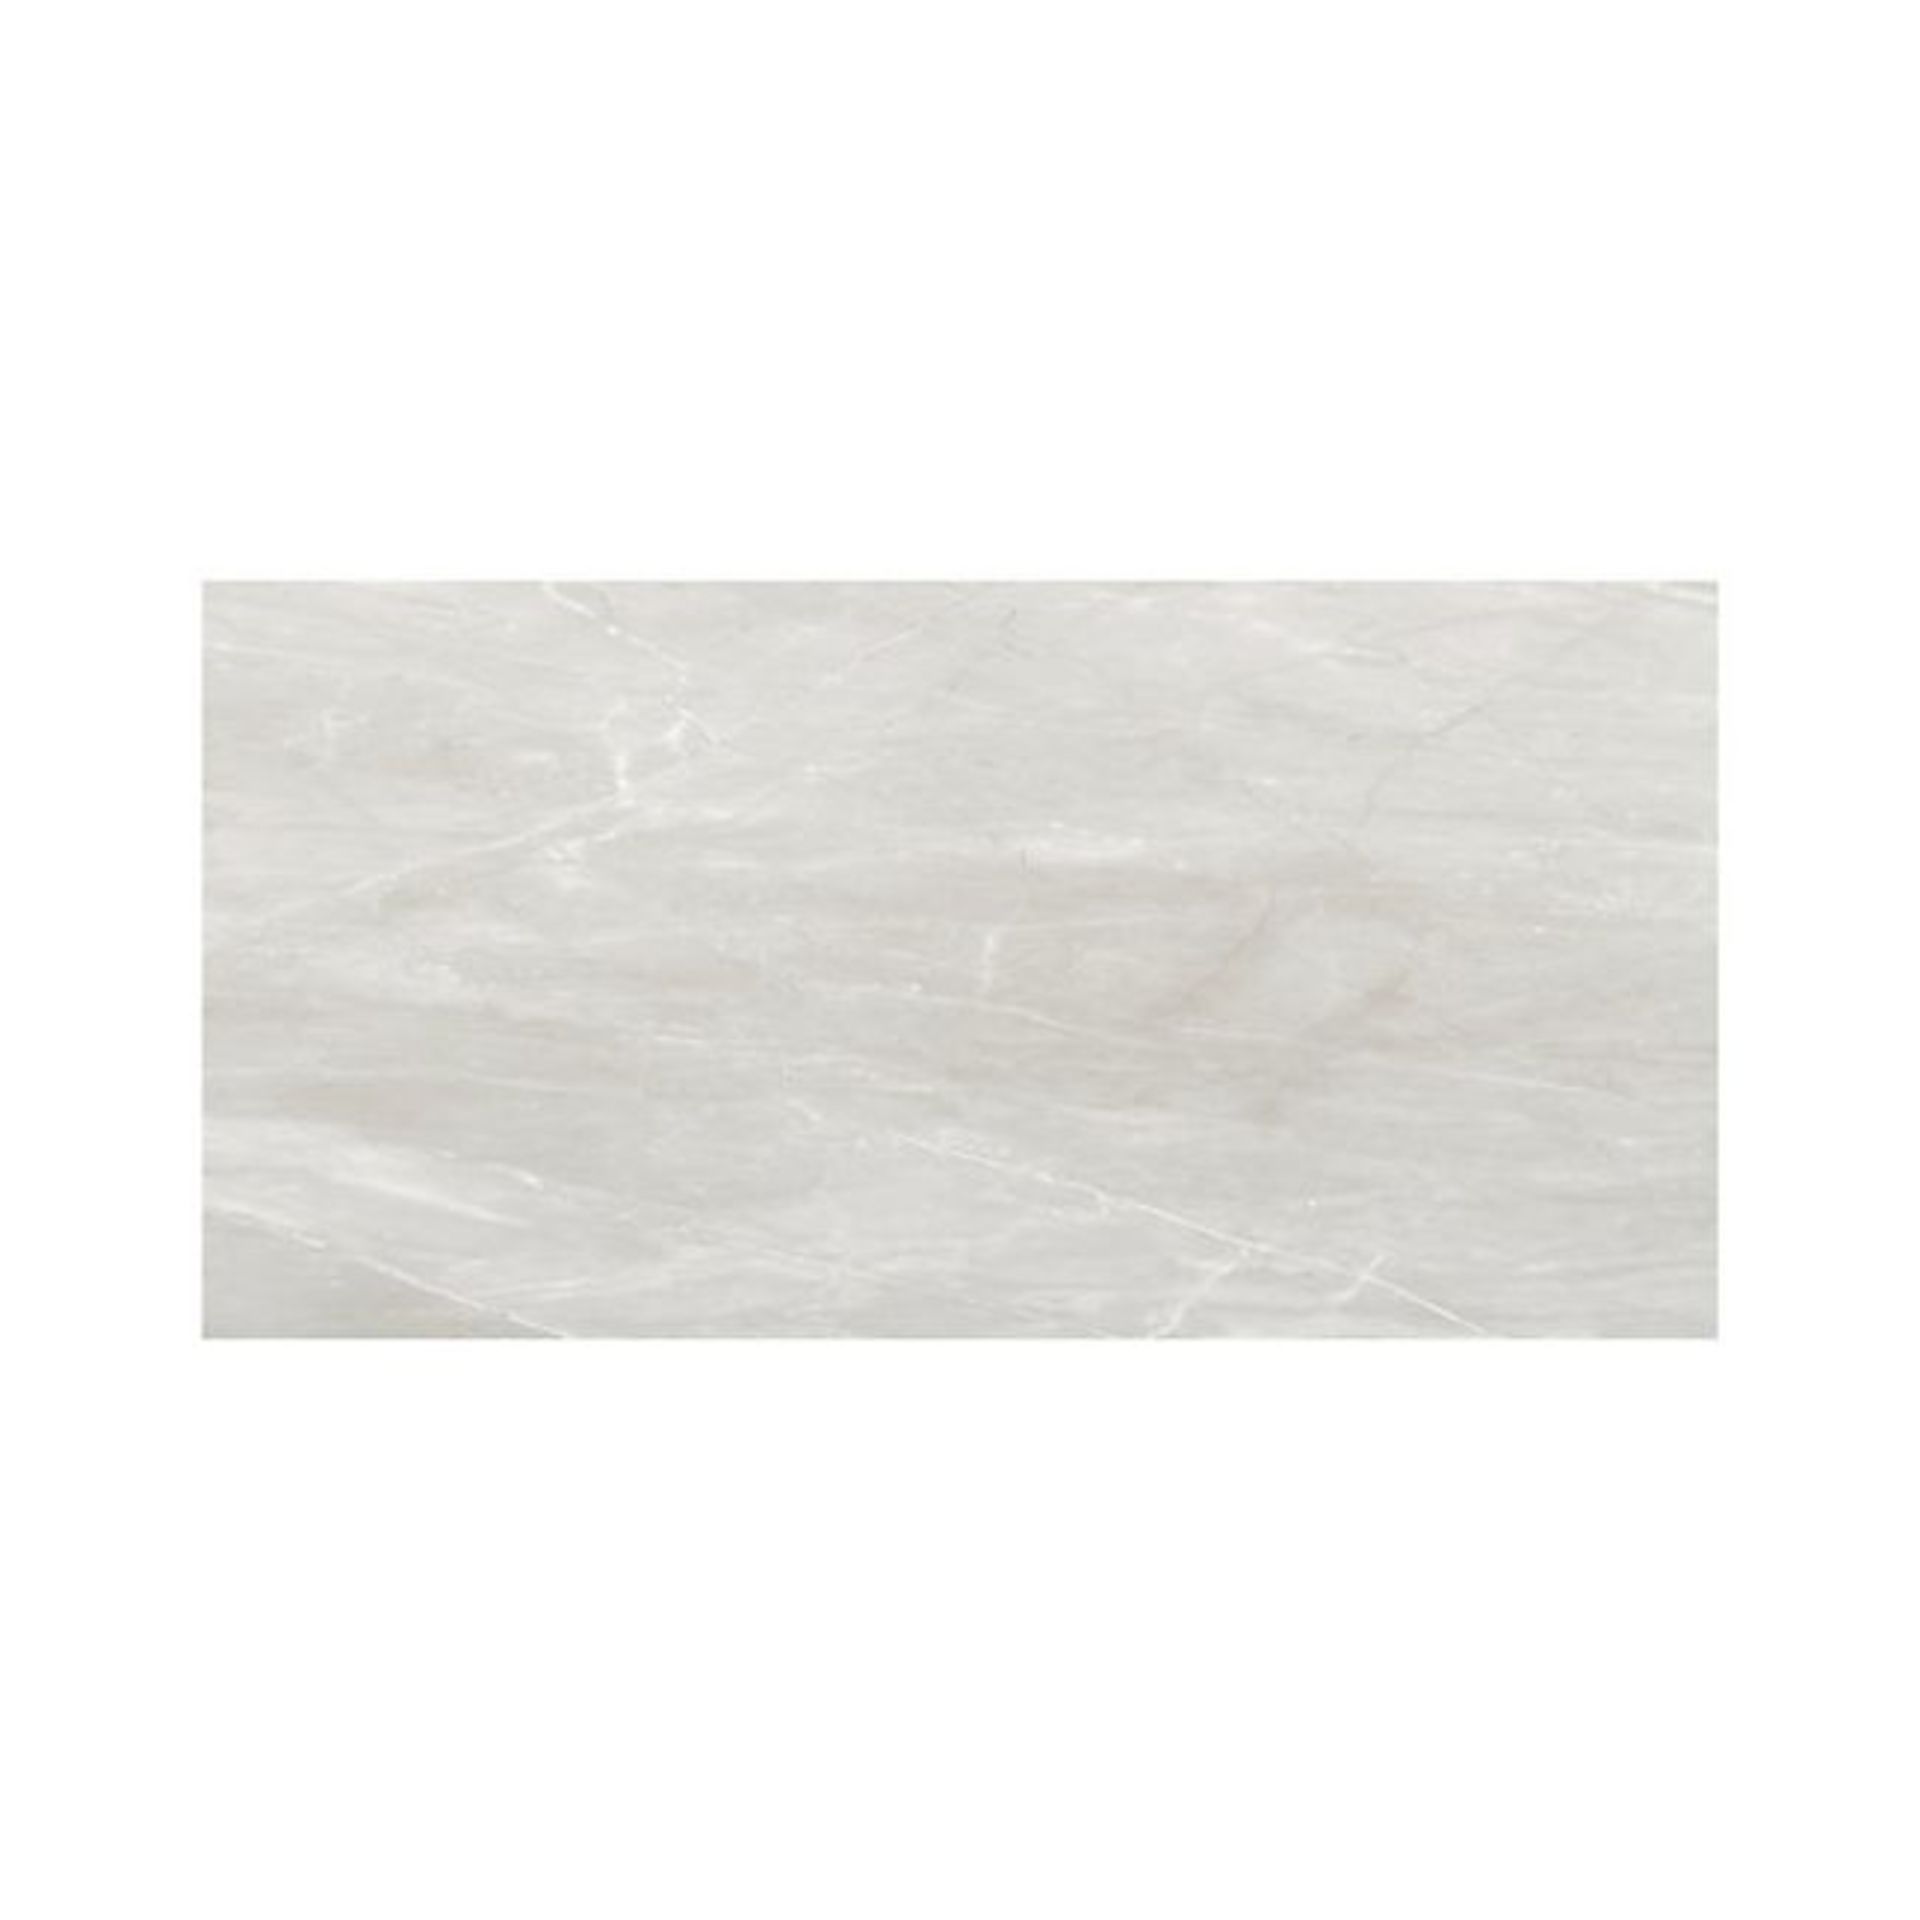 NEW 16.2m2 Killington Light Grey Matt Marble effect Ceramic Floor tile. Room use: Any room, - Image 2 of 2